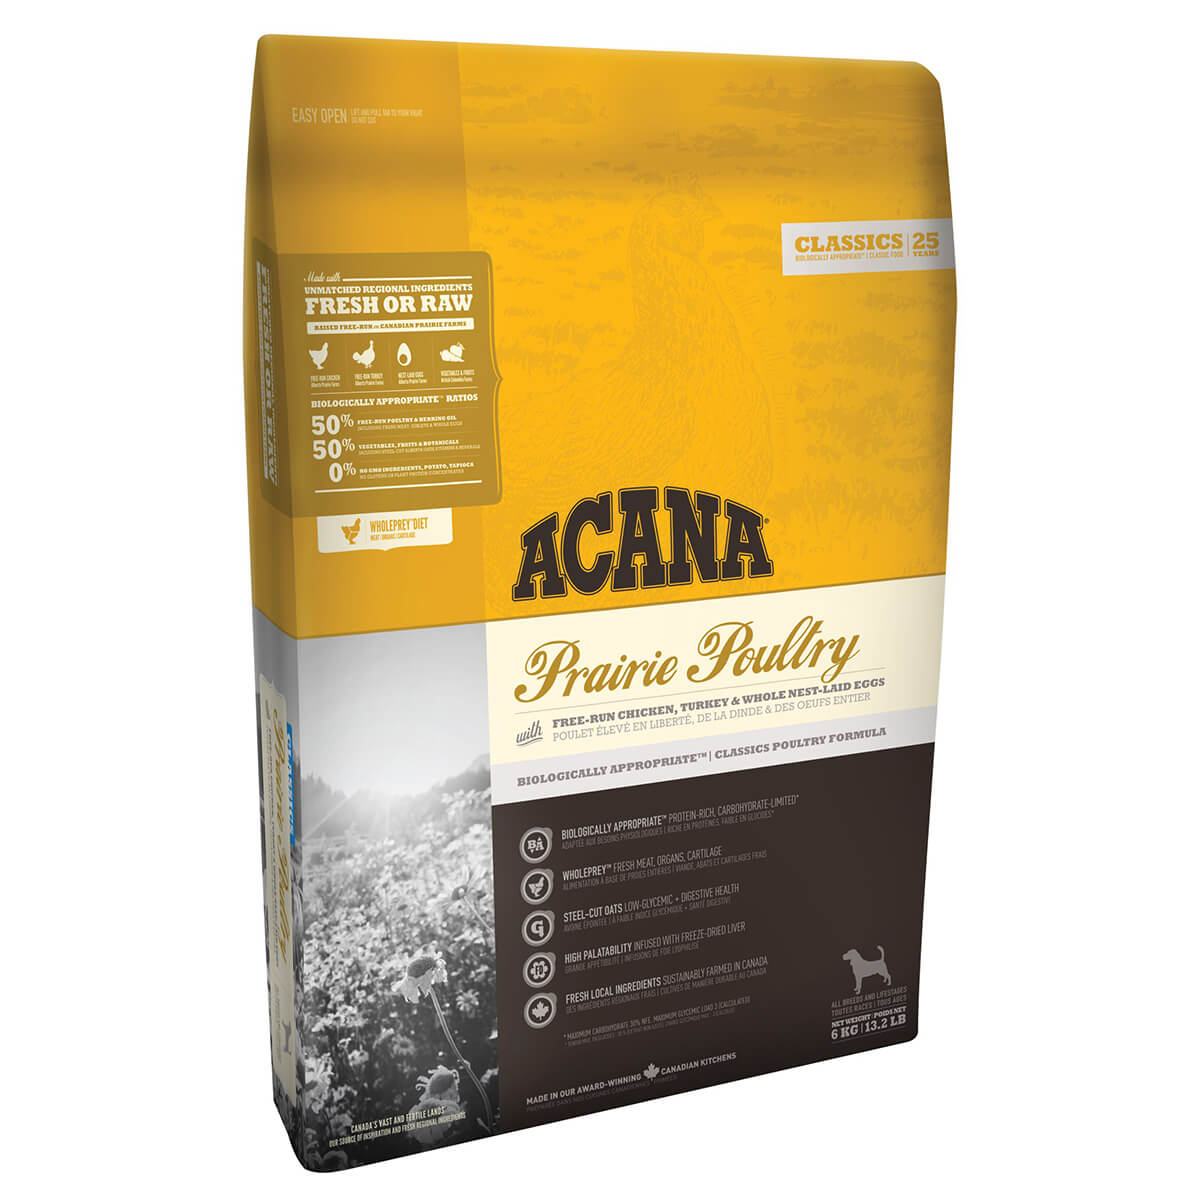 Acana Classic Prairie Poultry Dog Food - 17 kg